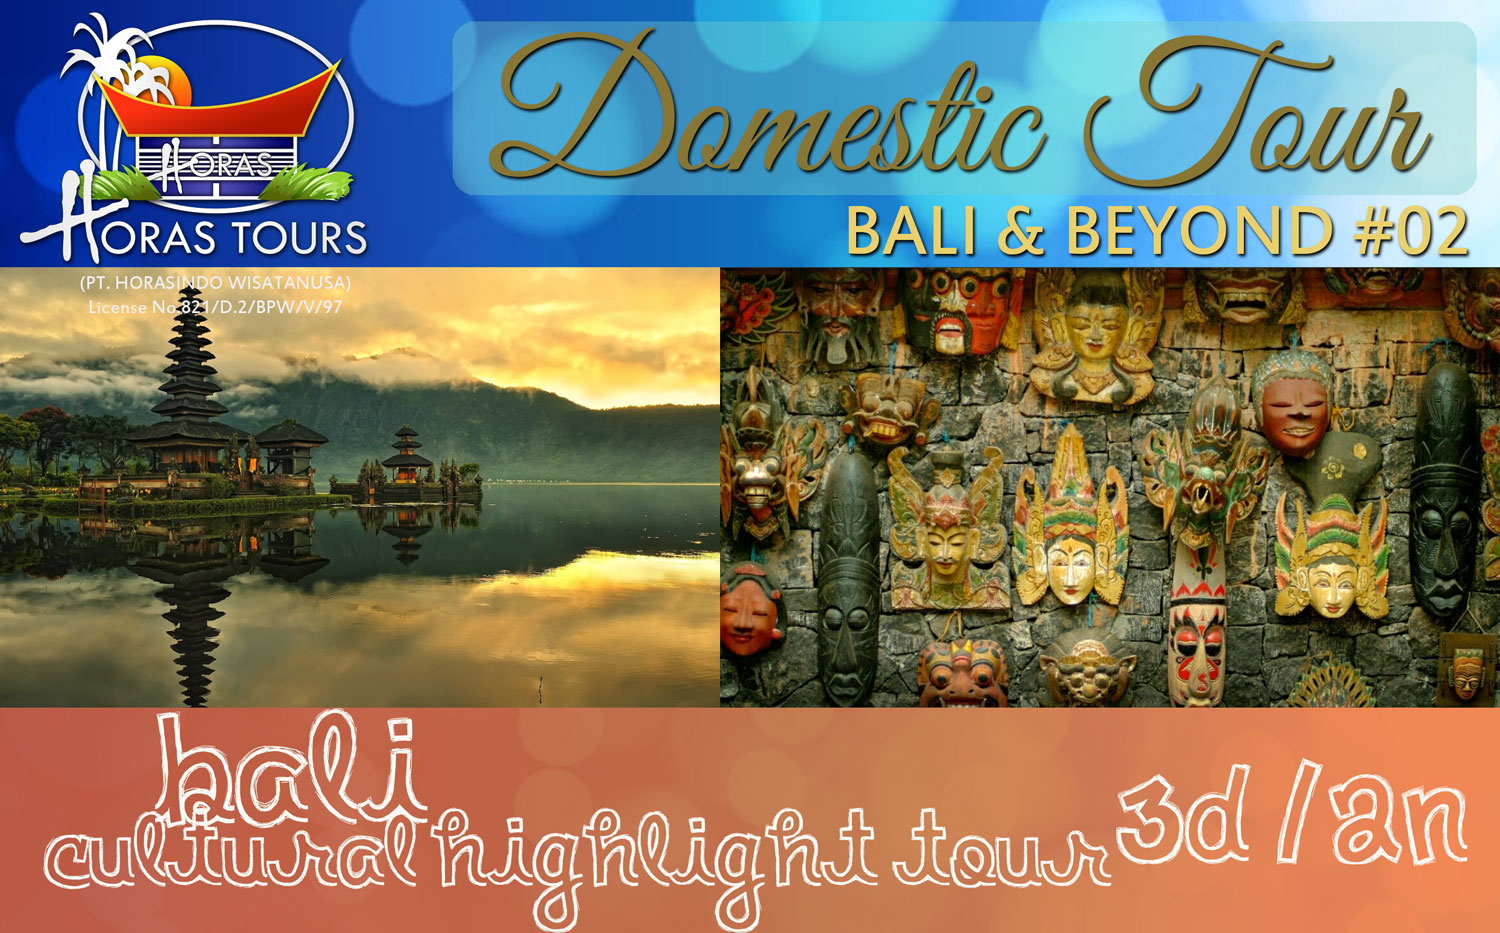 Bali Cultural Holiday Tour